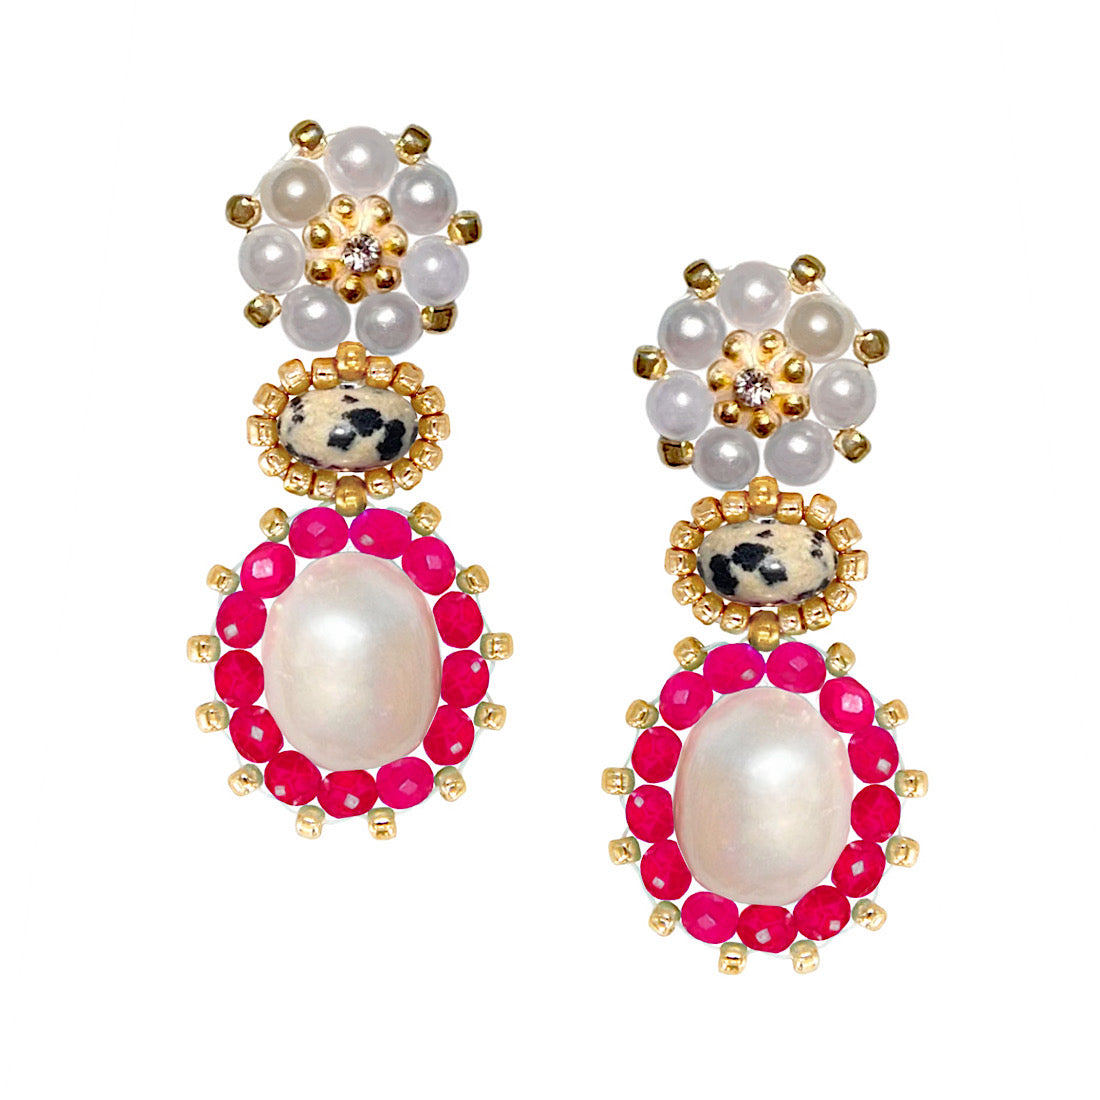 gemstone summer statement earrings with pink swarovski stones and dalmatis jasper gemstone 